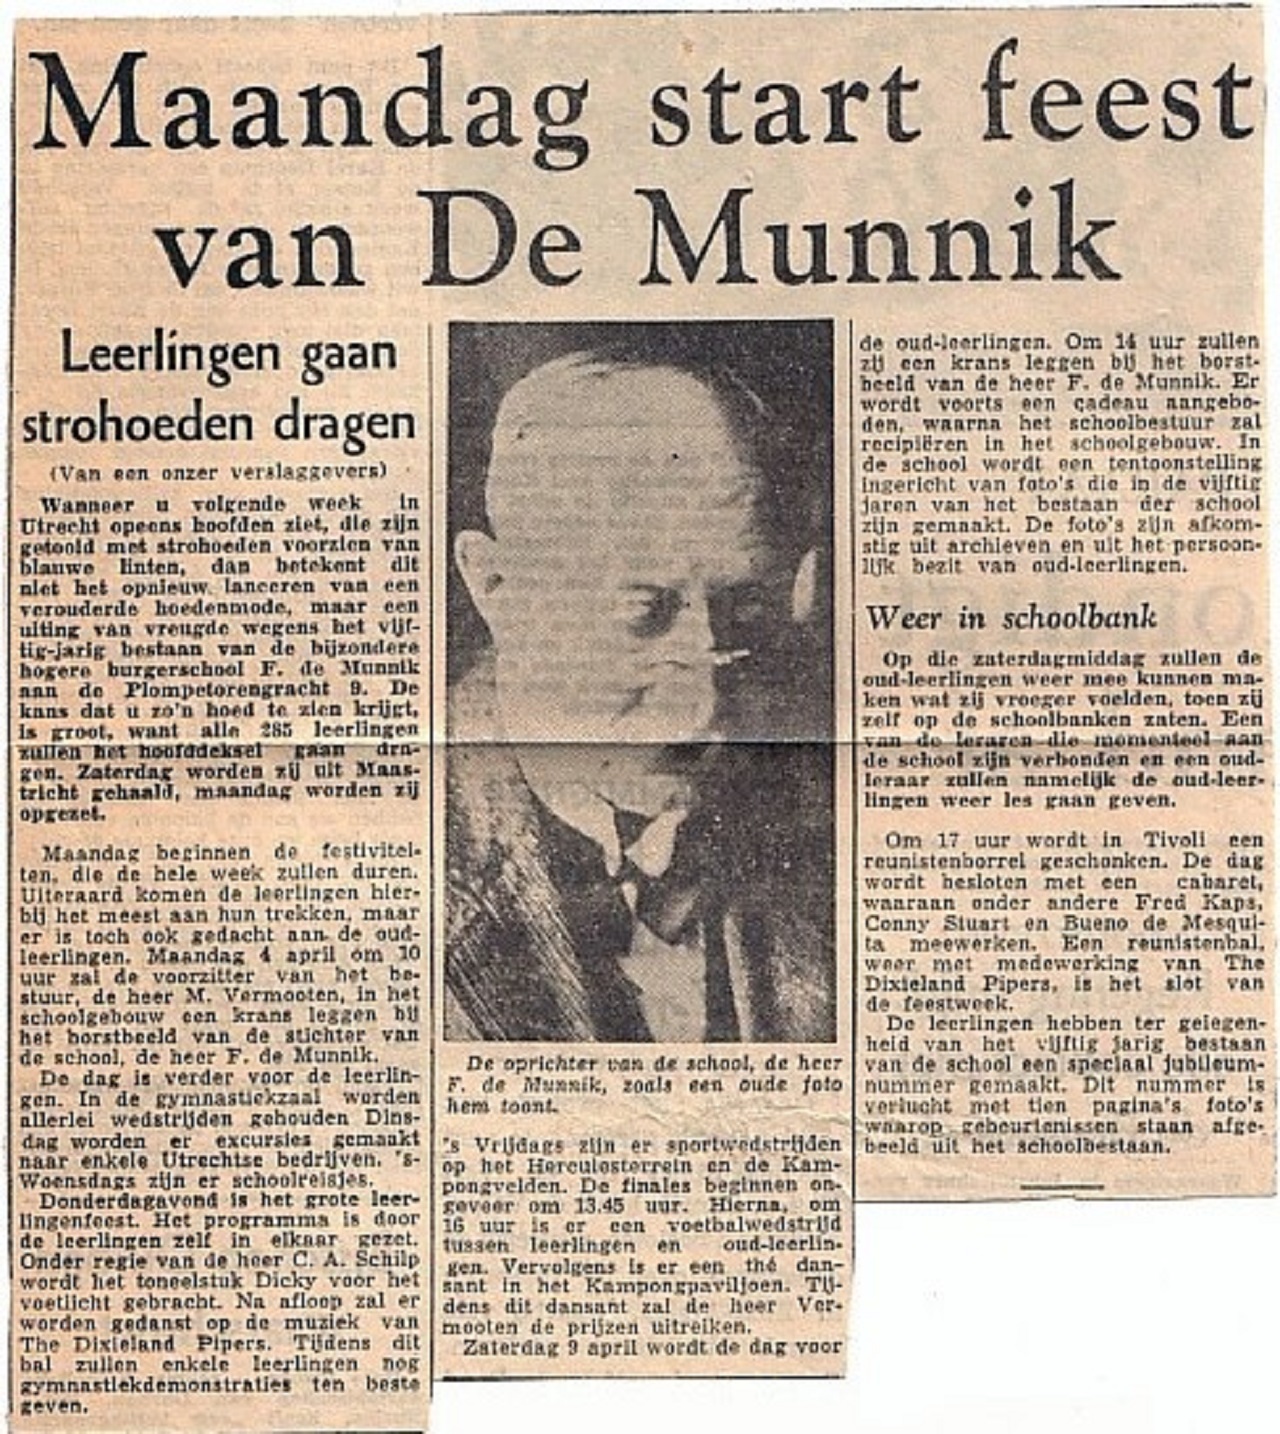 Zaterdag 2 april 1960 "Maandag start feest van De Munnik"